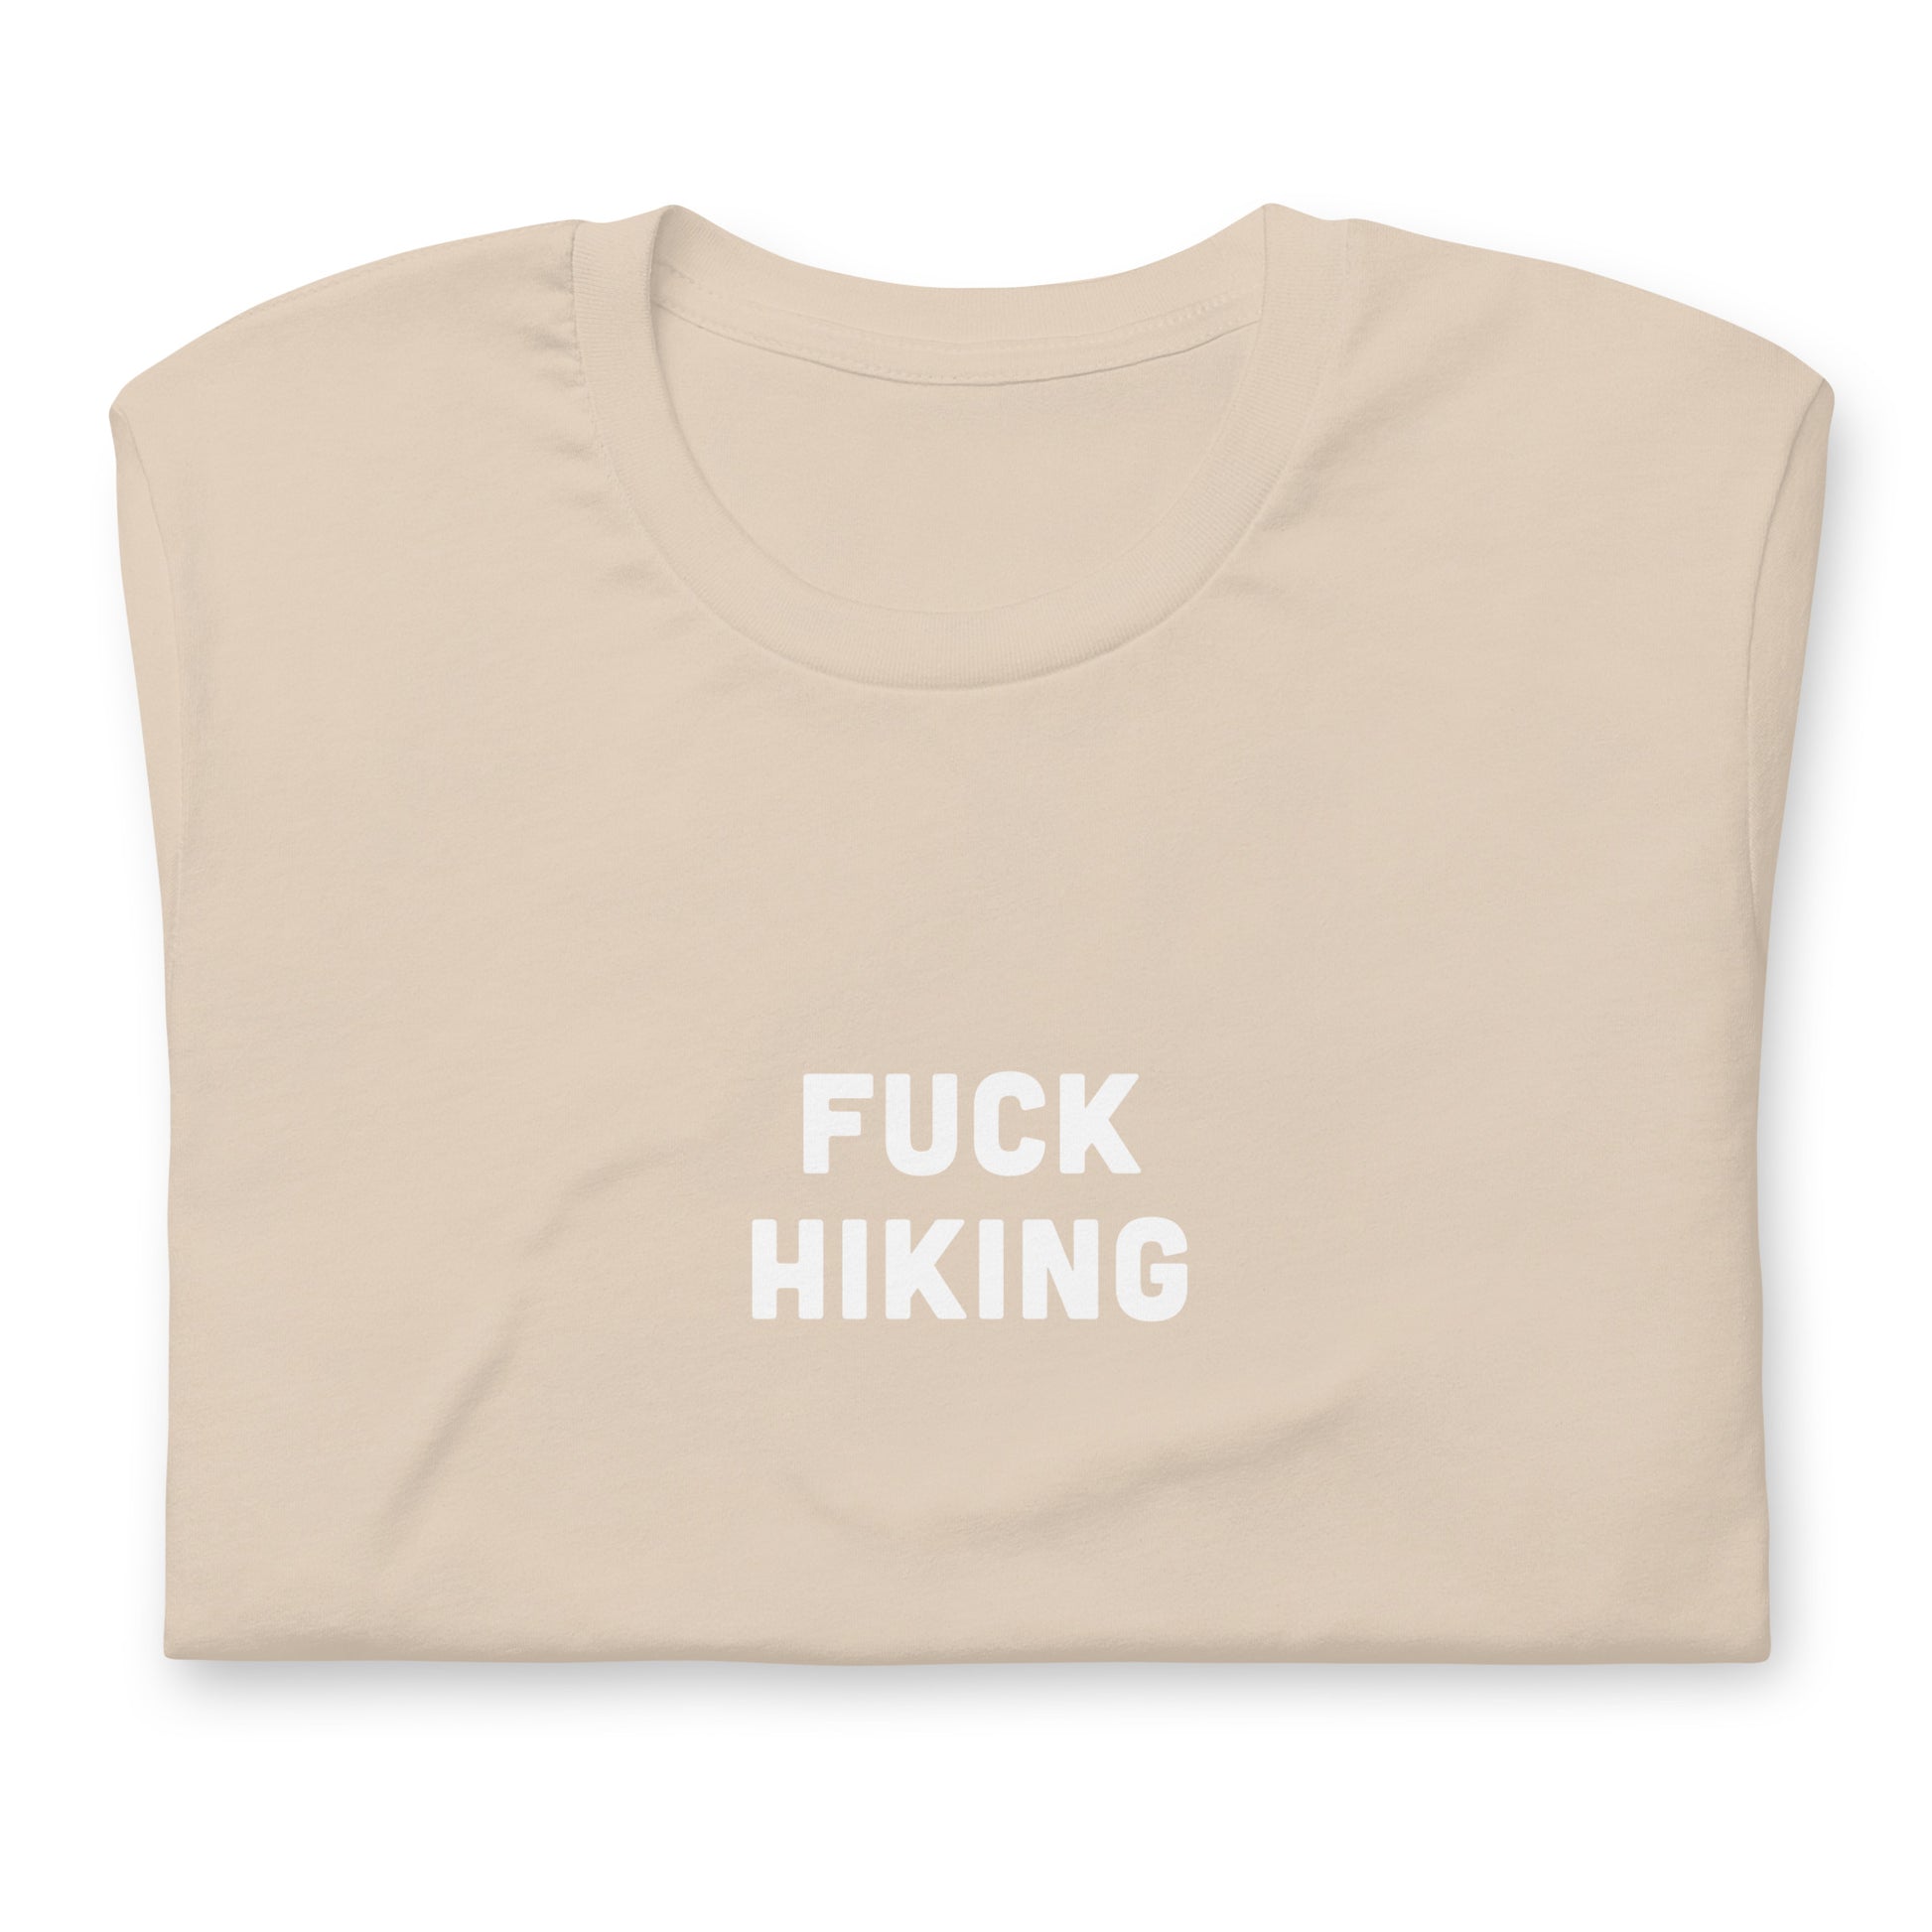 Fuck Hiking T-Shirt Size L Color Asphalt